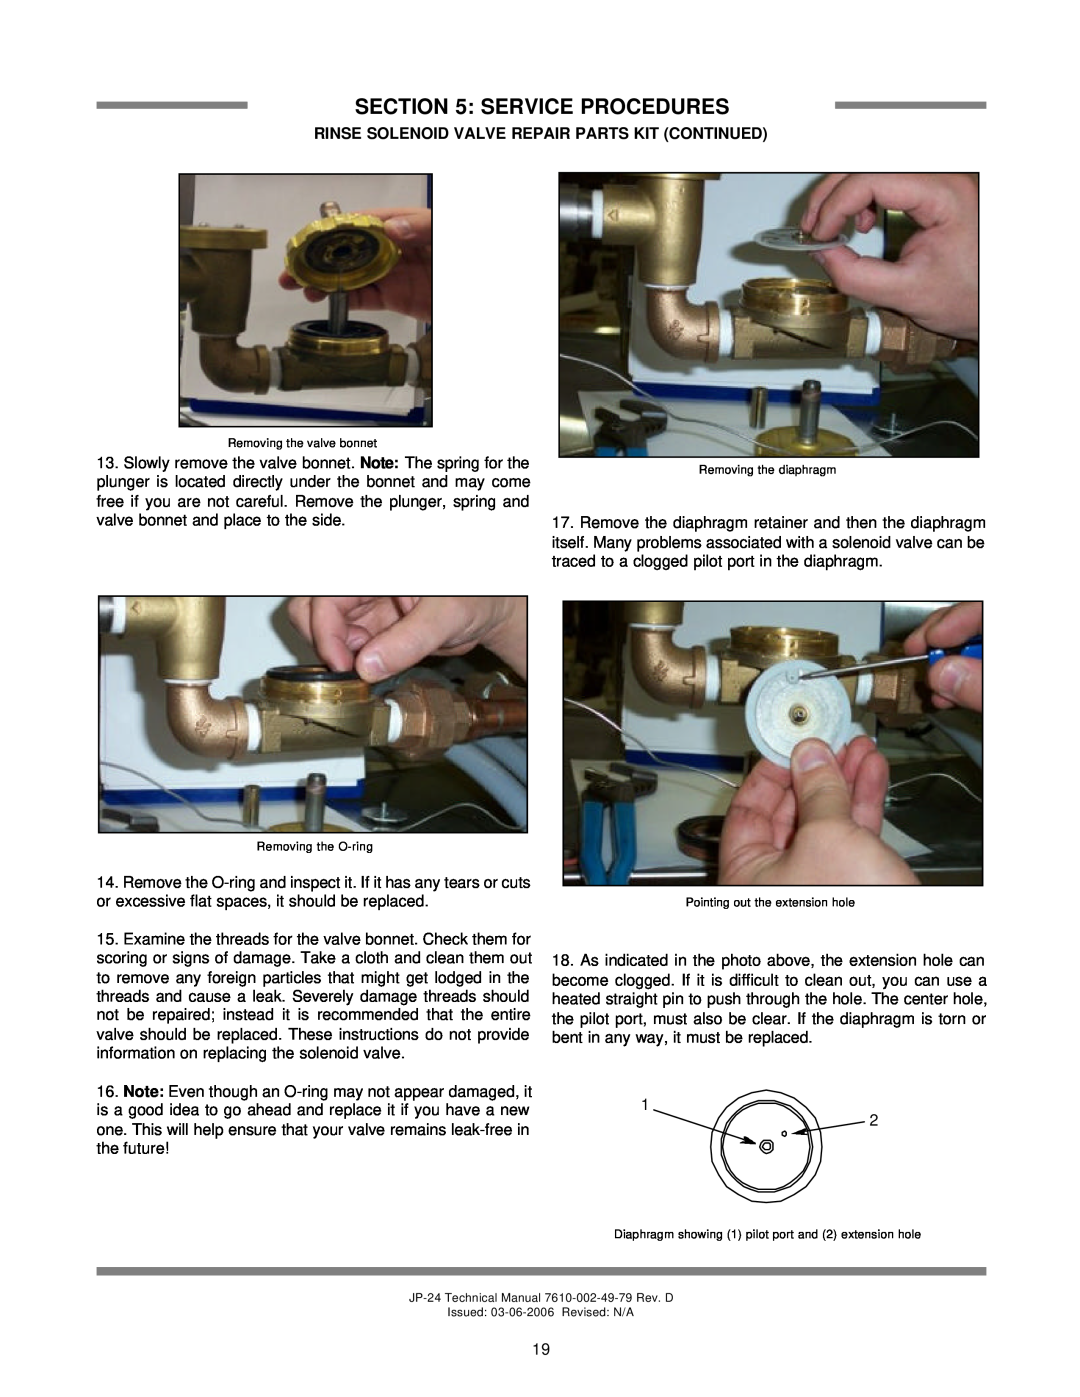 Jackson jp-24b, JP-24BF, JP-24F technical manual Service Procedures, Rinse Solenoid Valve Repair Parts Kit Continued 